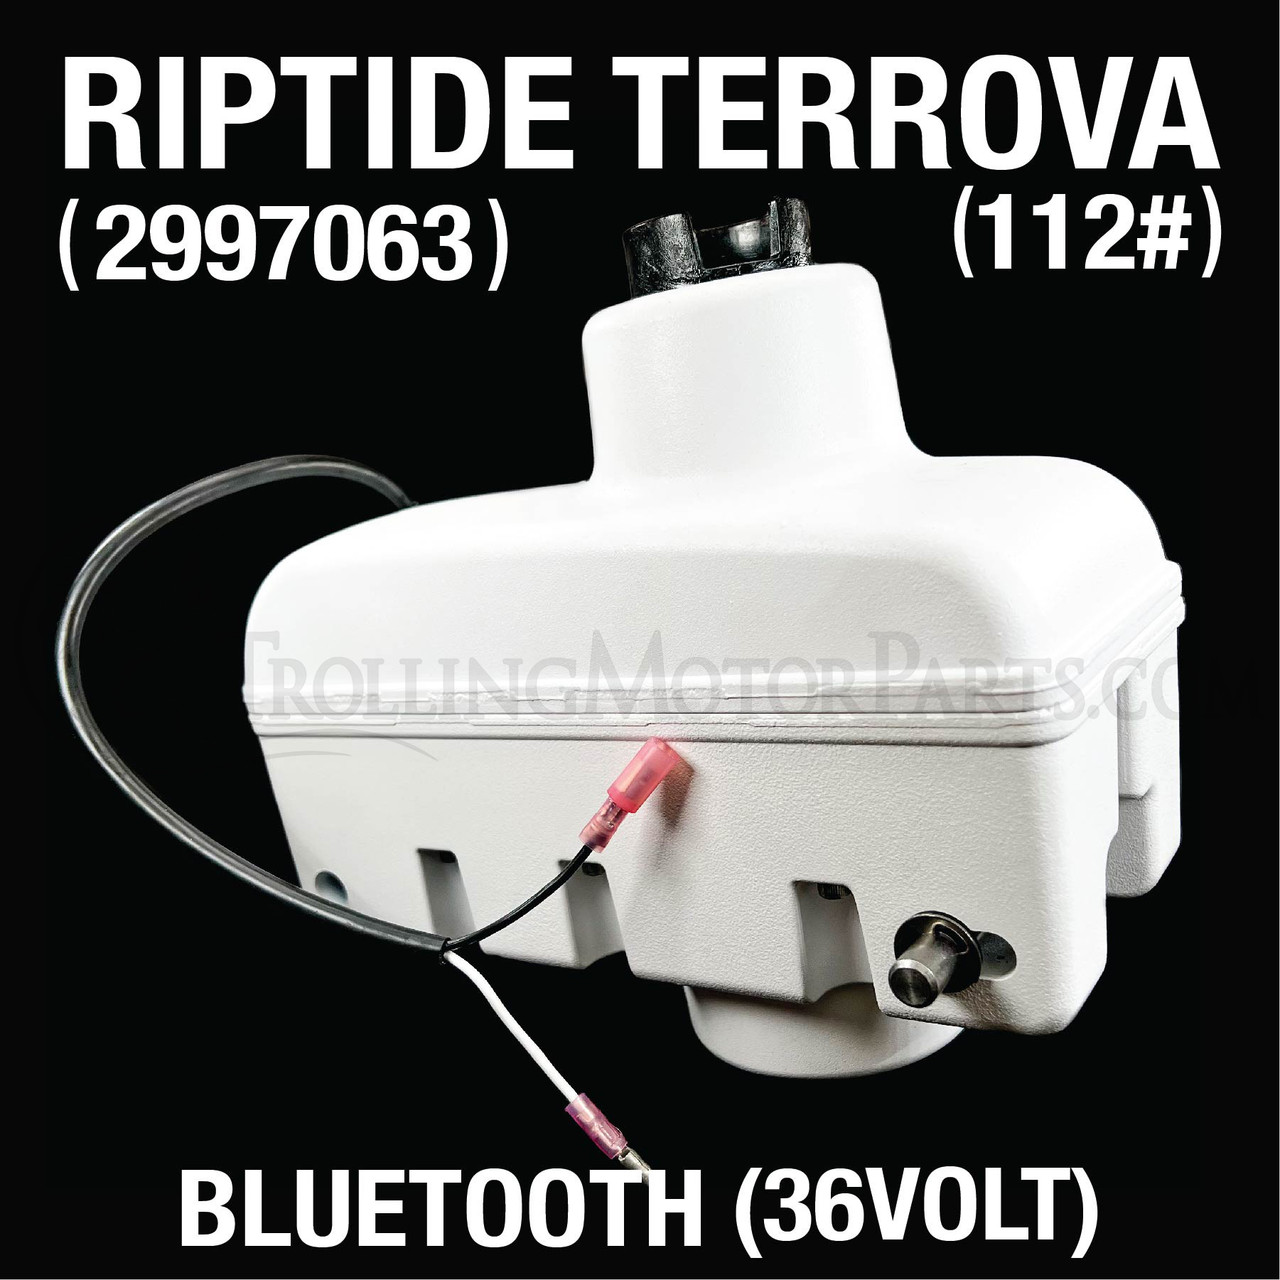 dilemma stilte Goed opgeleid Minn Kota Riptide ST Terrova Steering Motor (Bluetooth)(36 Volt)(112#) -  Trollingmotorparts.com